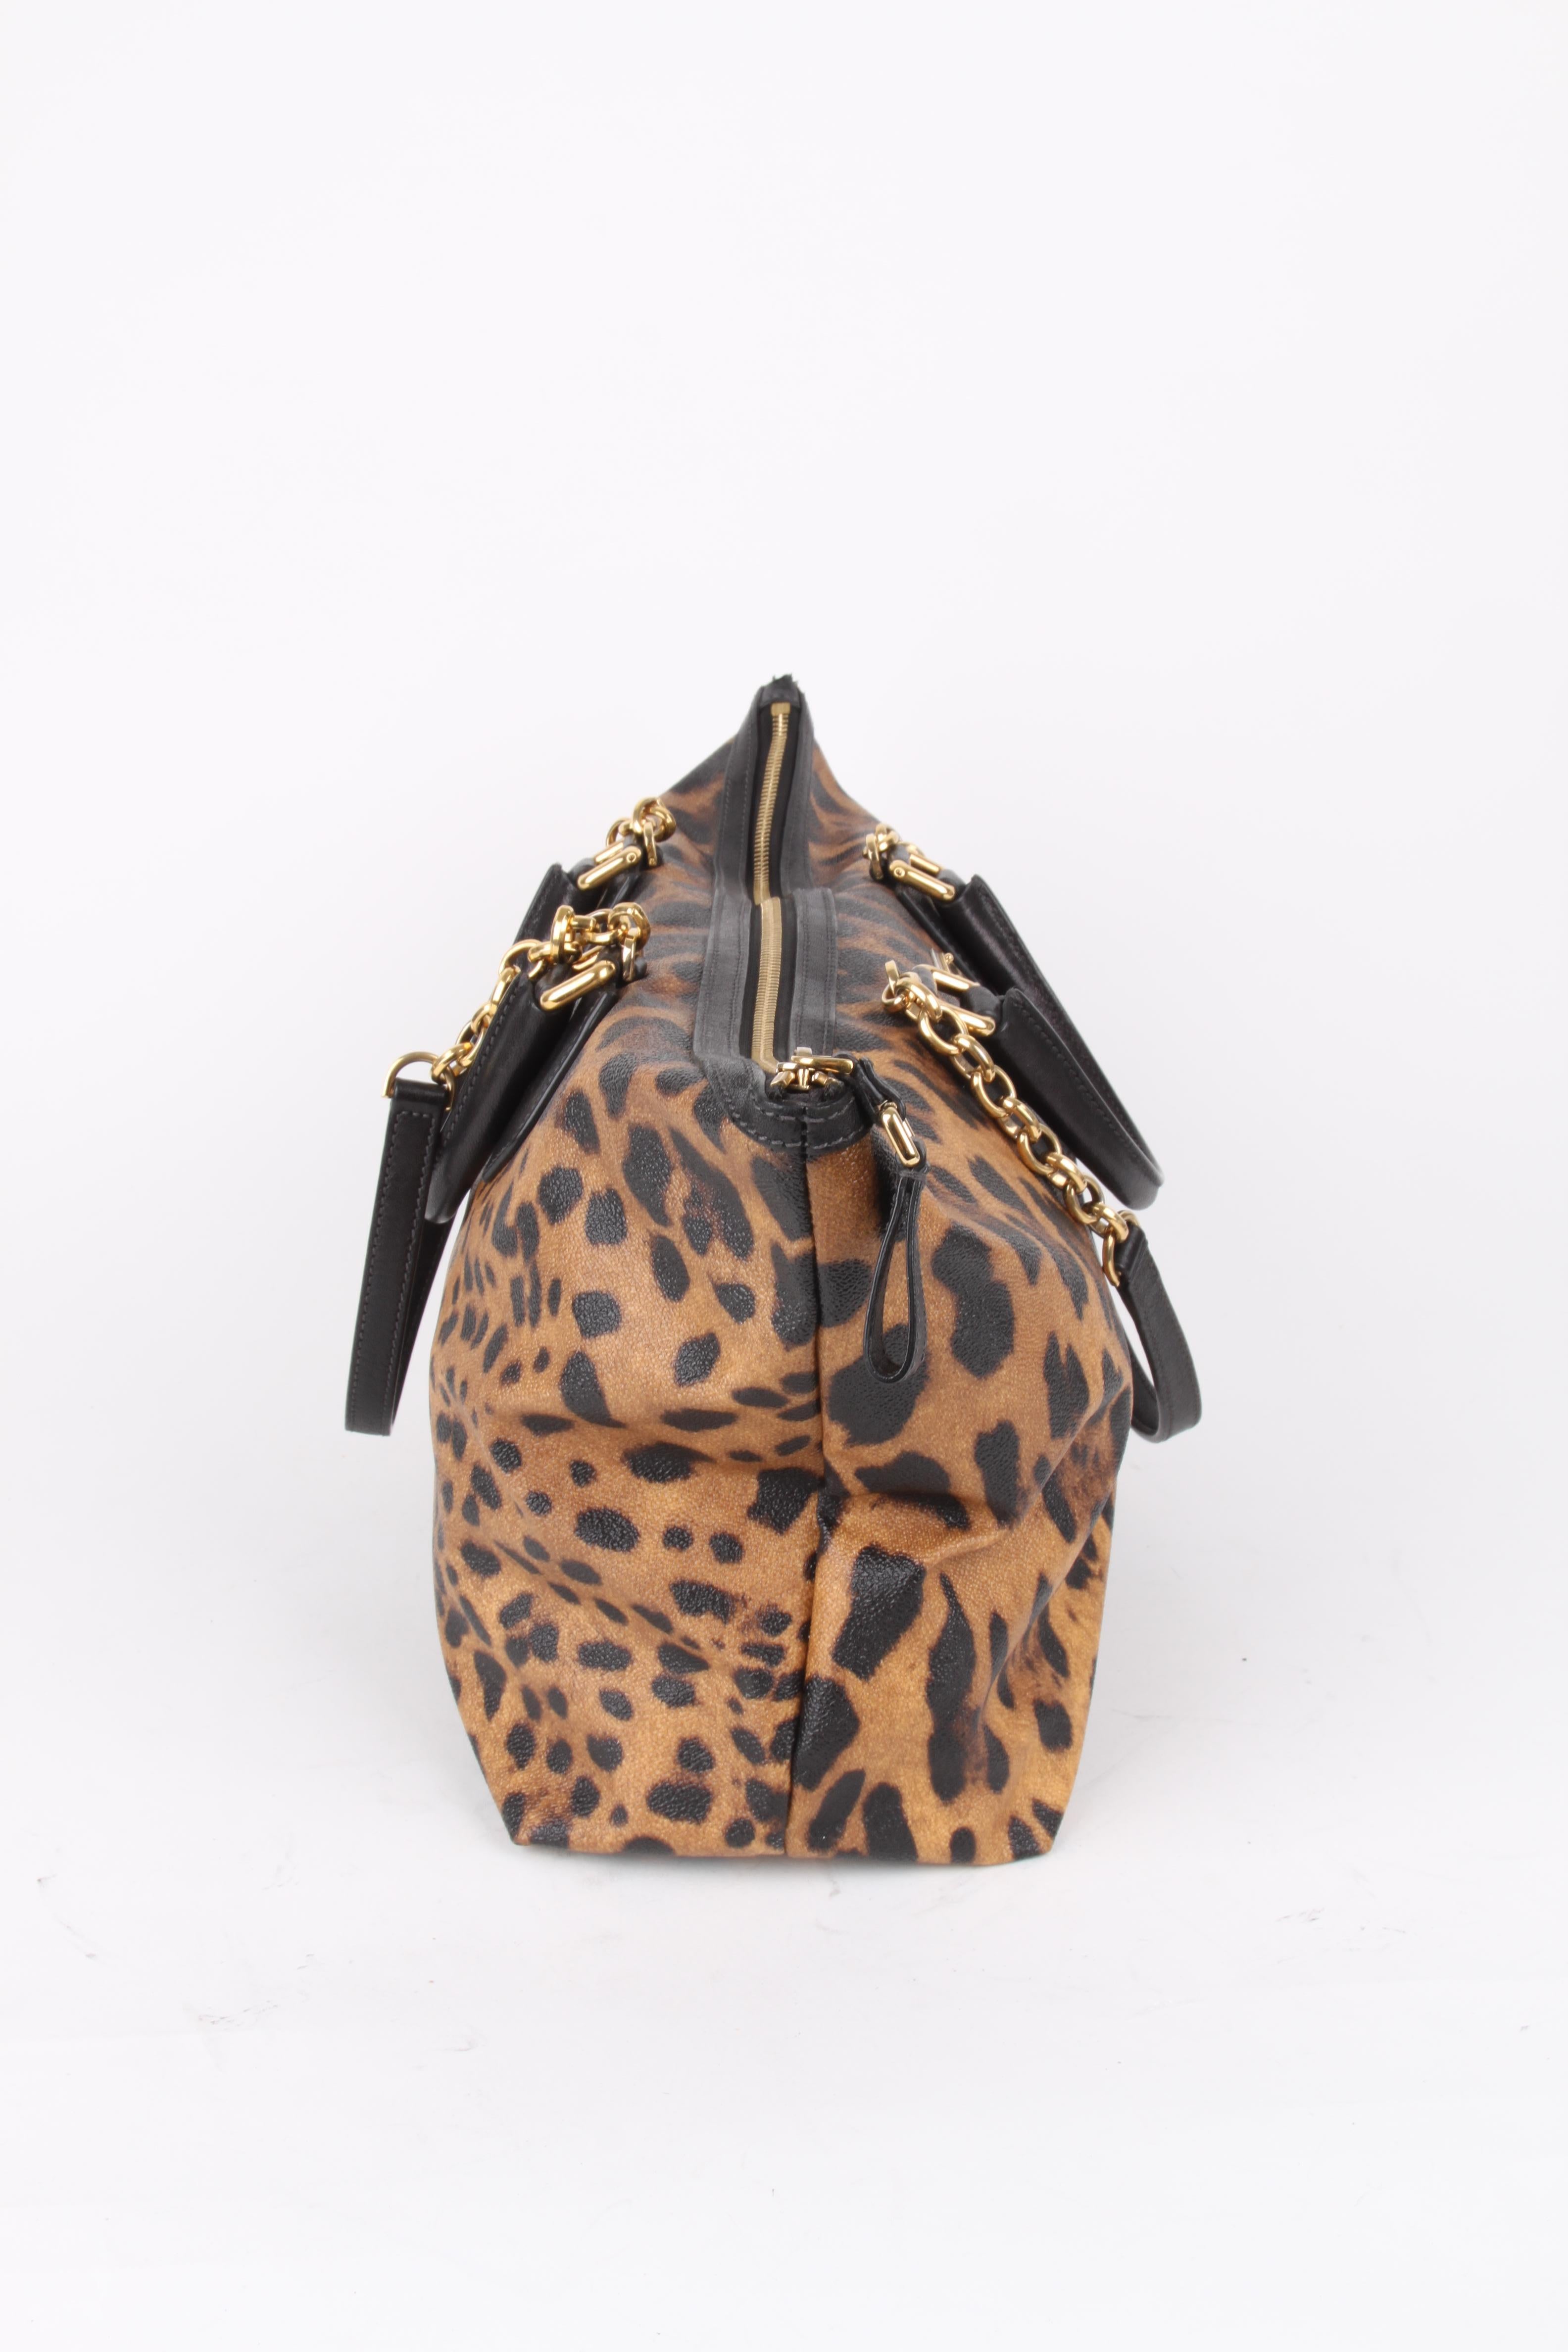   Dolce and Gabbana Brown Canvas Leather Leopard Print Handbag    1